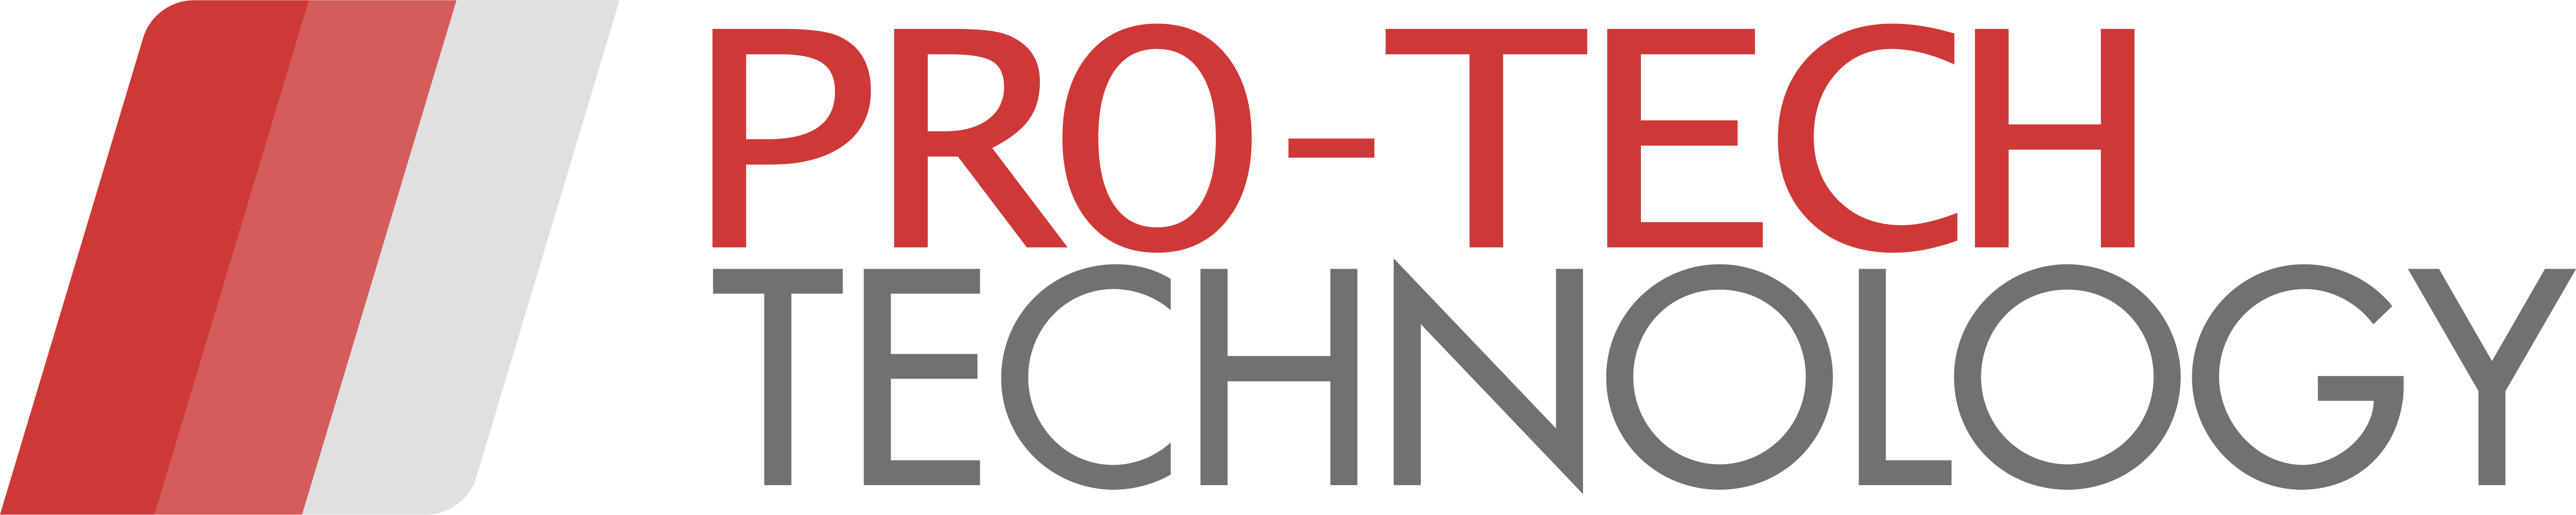 PRO-TECH TECHNOLOGY (ASIA) LTD. | Pro-Tech Technology is a progressive ...